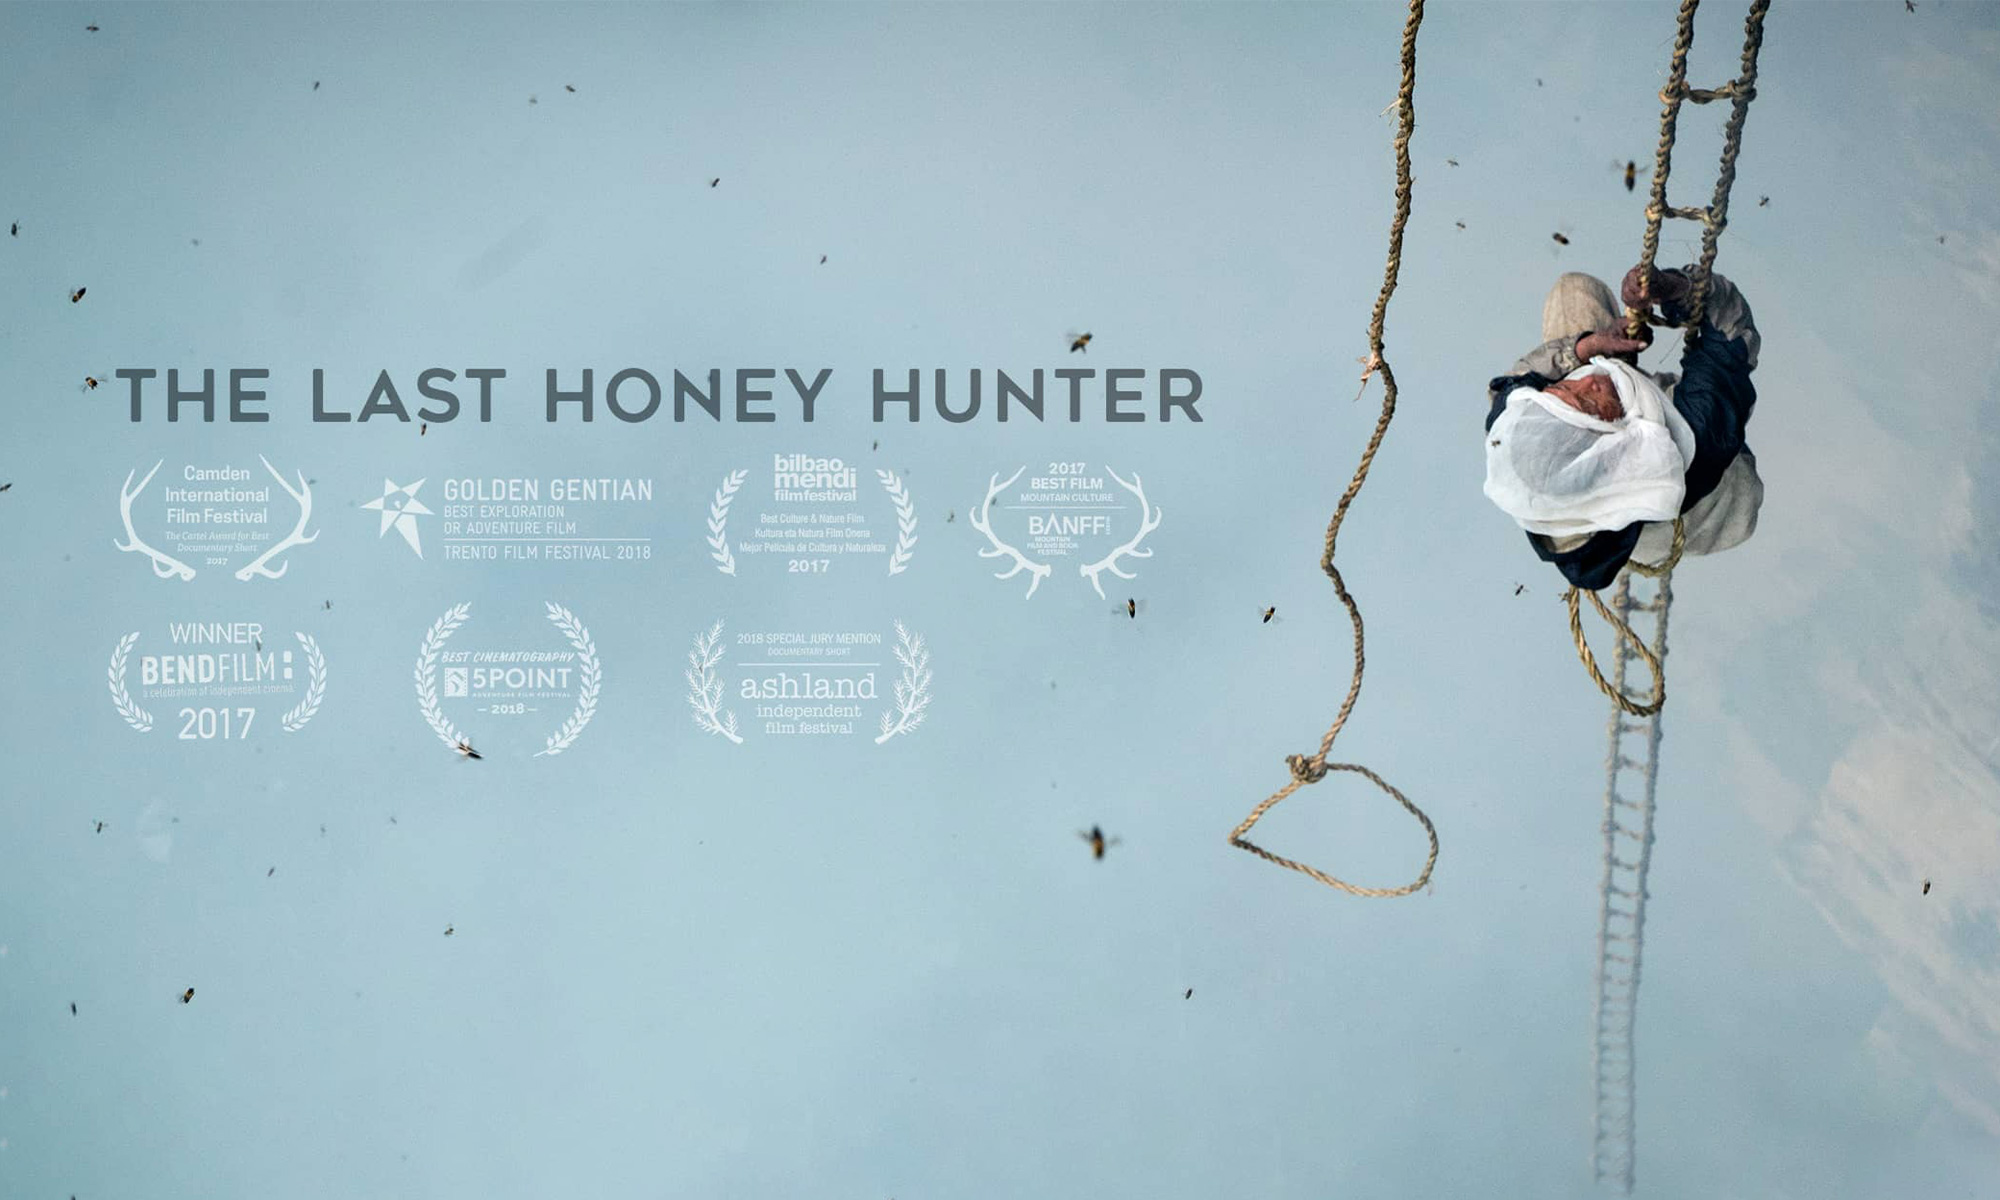 The last honey hunter